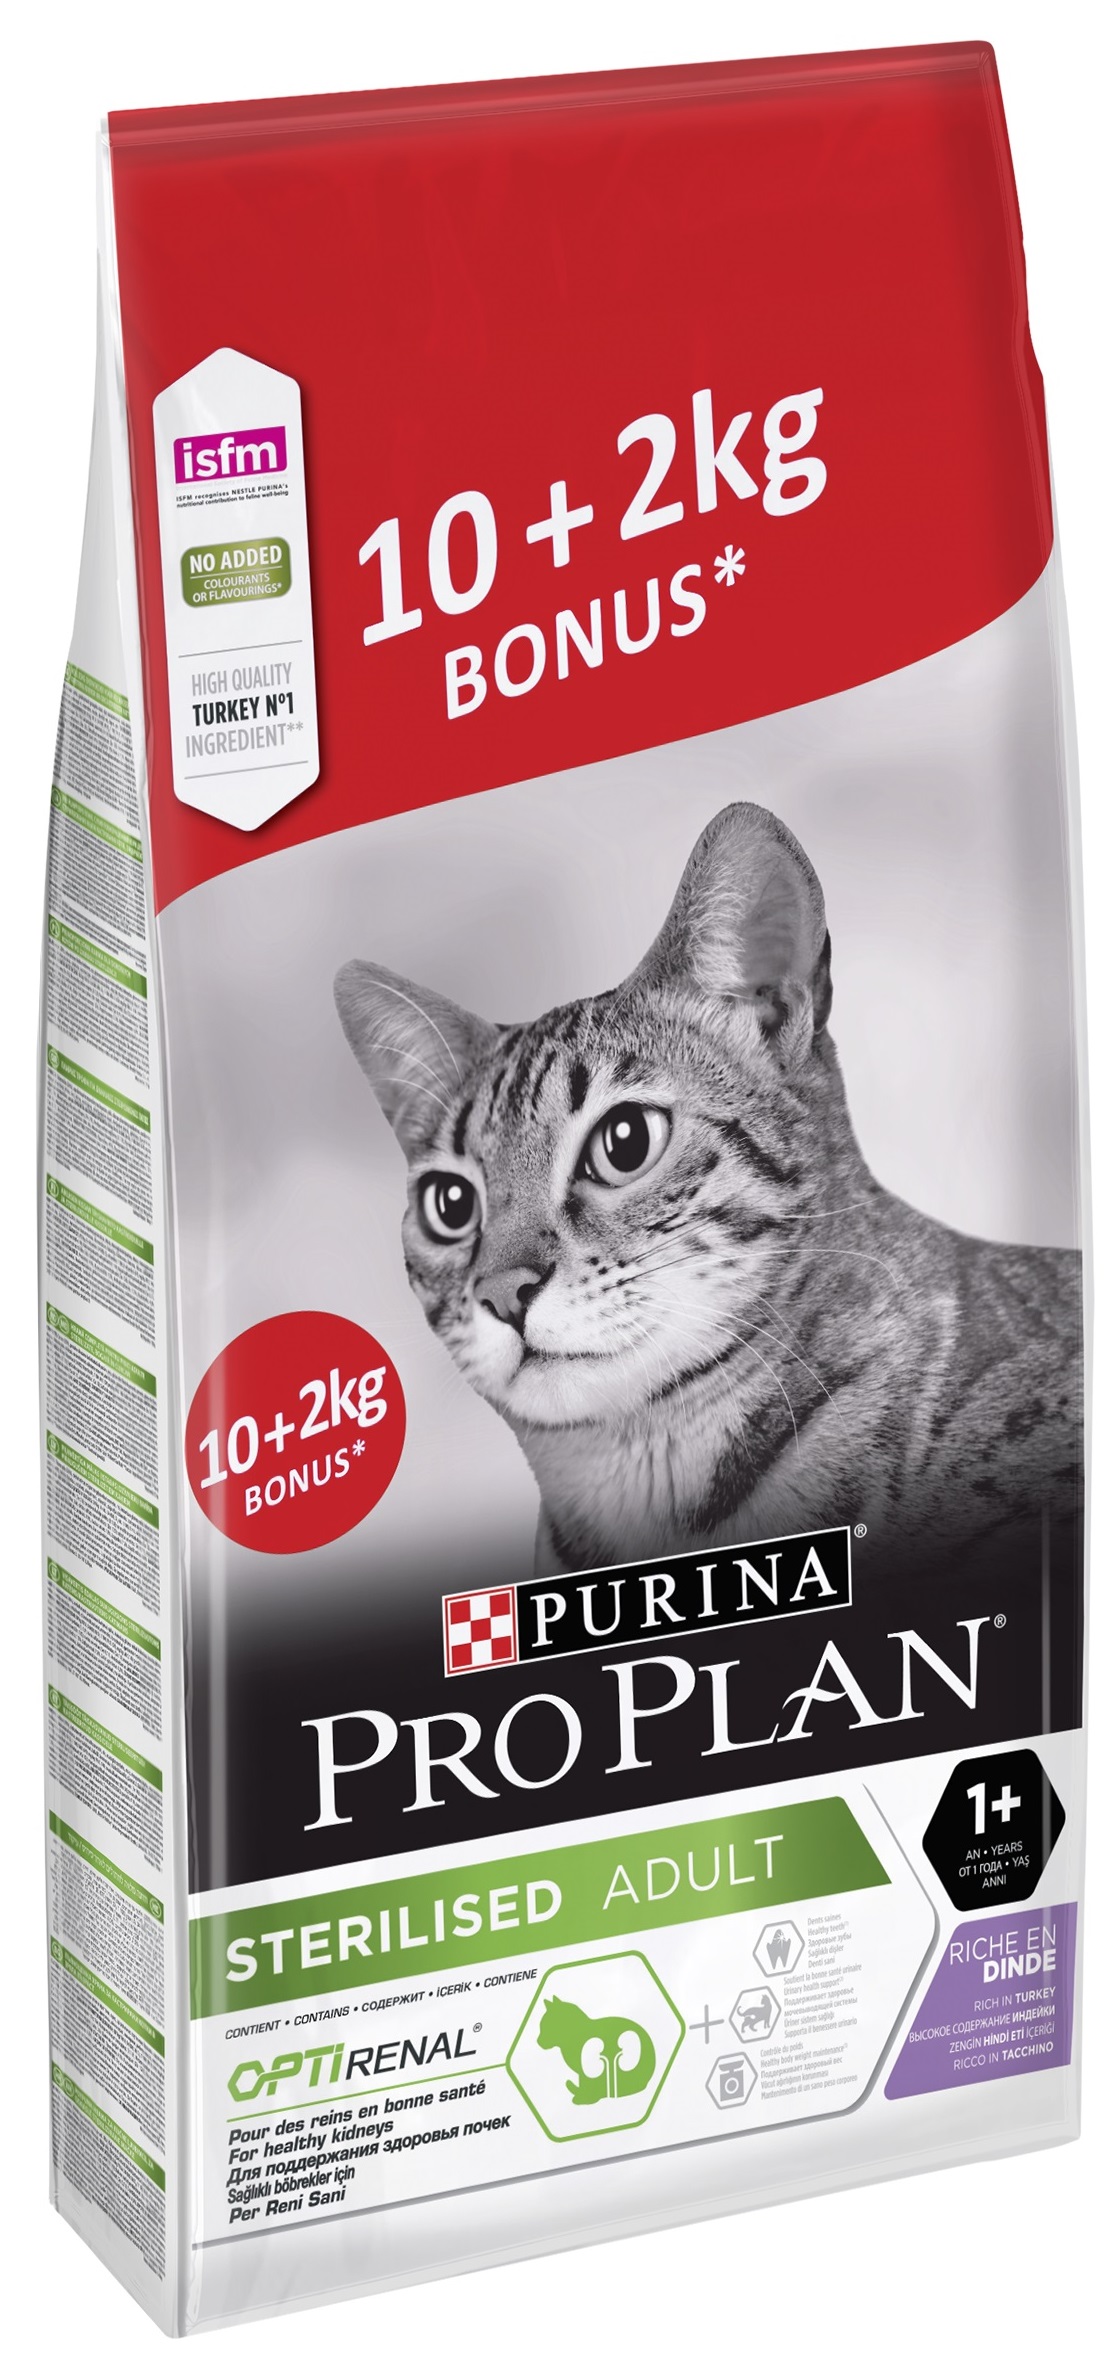 Купить проплан для кошек 10. Проплан для котят Деликат индейка 10 +2 кг. PROPLAN delicate для котят с индейкой. Pro Plan Sterilised 10. Сухой корм для кошек Purina Pro Plan Sterilised.